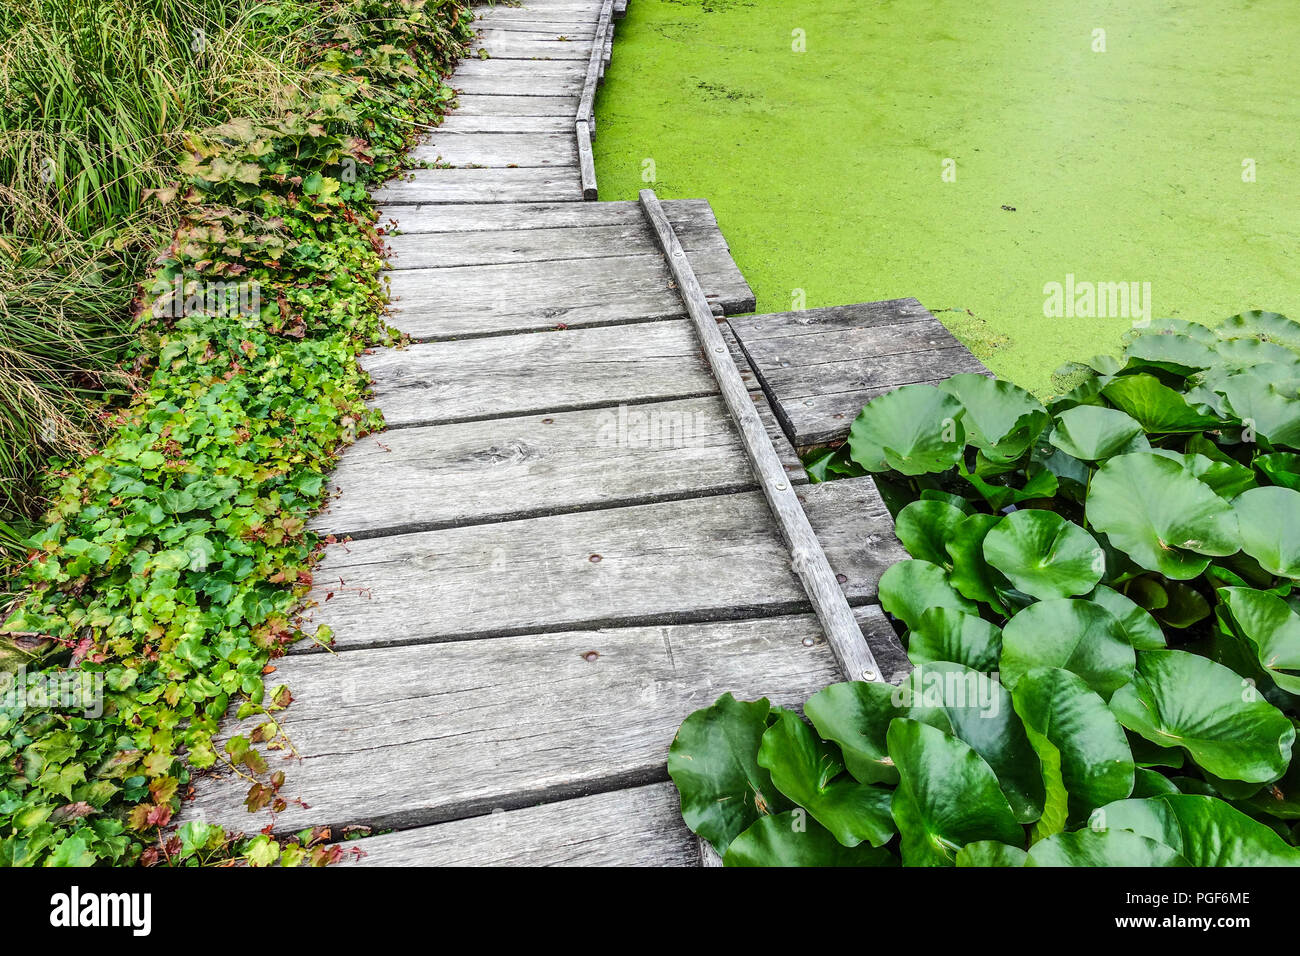 Wooden walkway around the garden pond, Duckweed covered pond Stock Photo